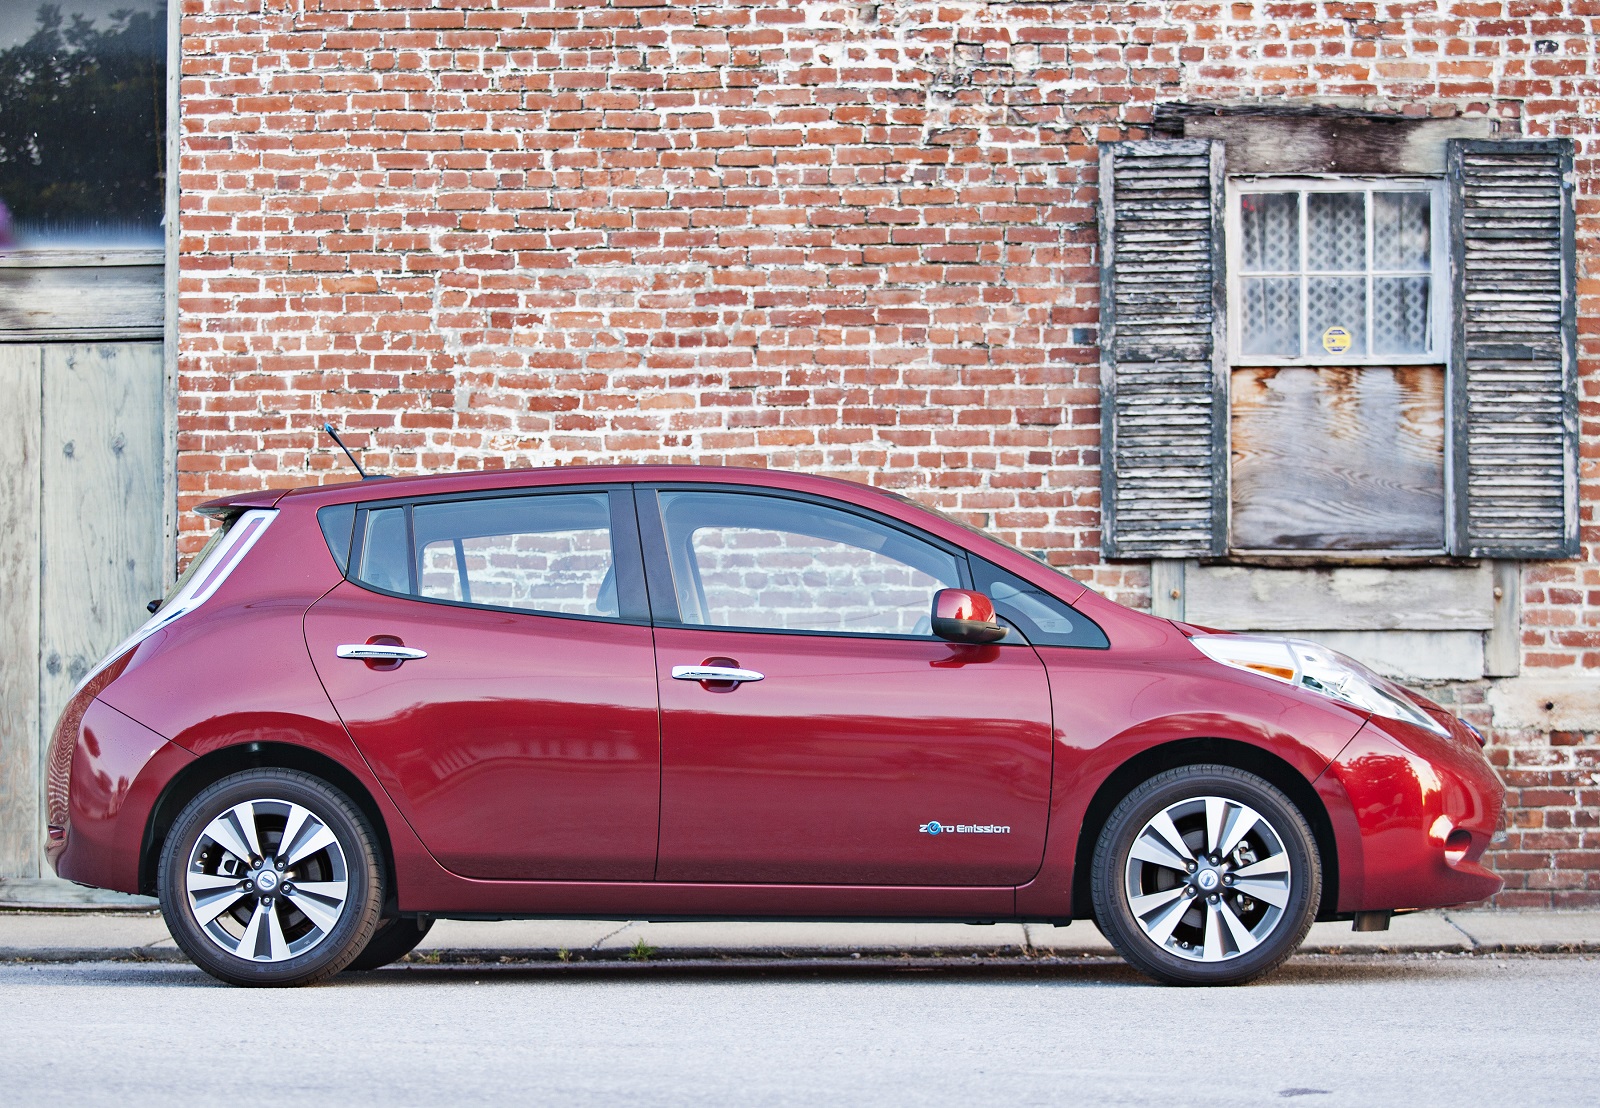 2014 Nissan Leaf Electric Car: 84-Mile Range, RearView Monitor Standard